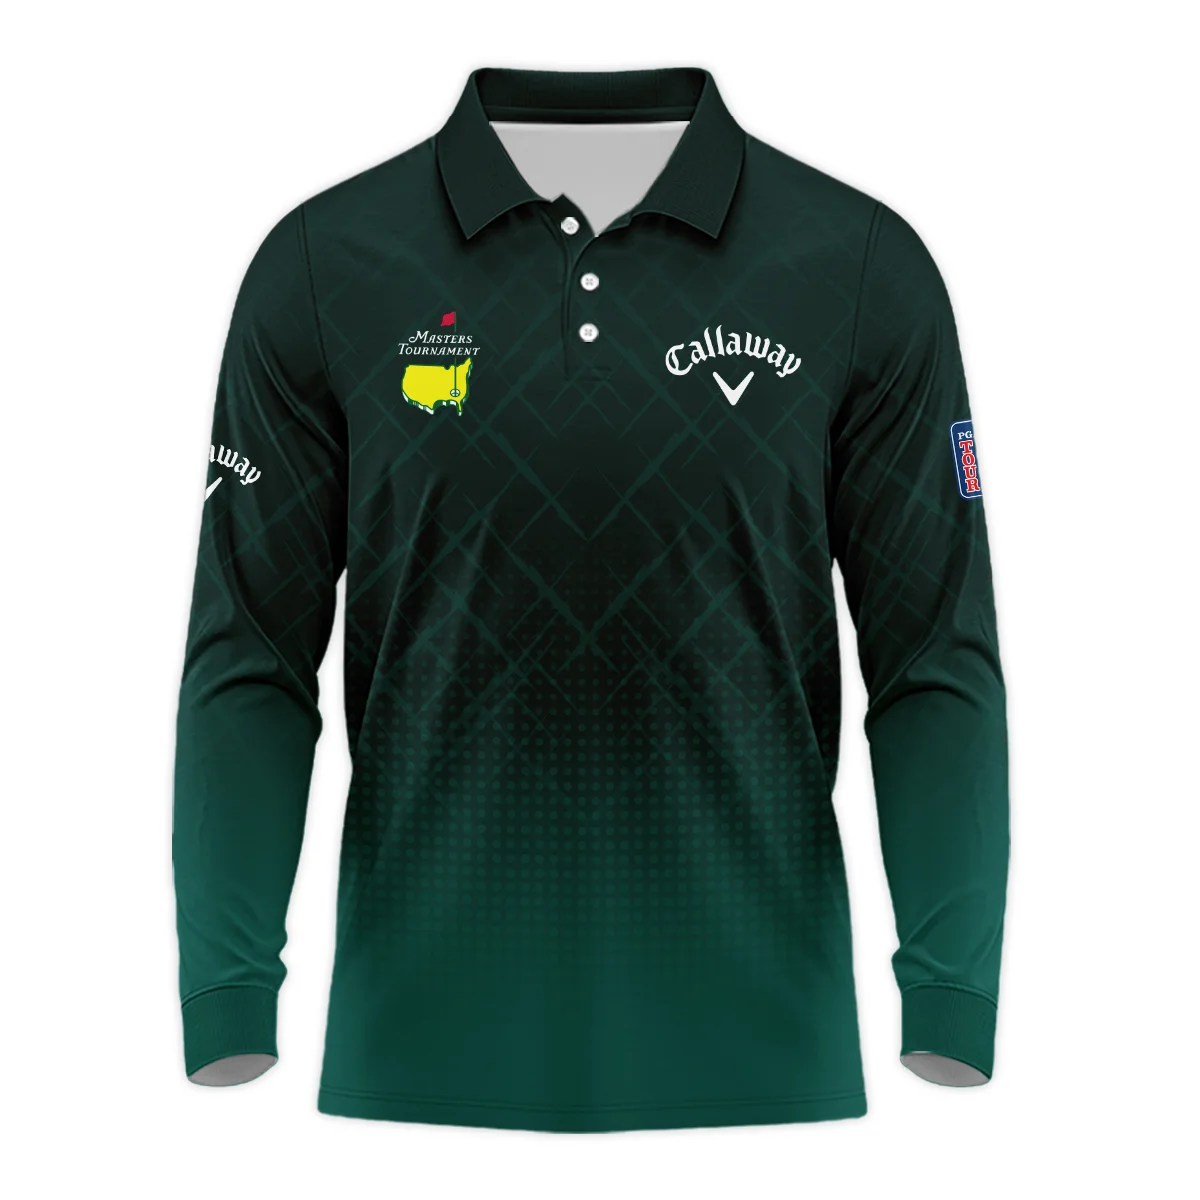 Callaway Masters Tournament Sport Jersey Pattern Dark Green Quarter-Zip Jacket Style Classic Quarter-Zip Jacket